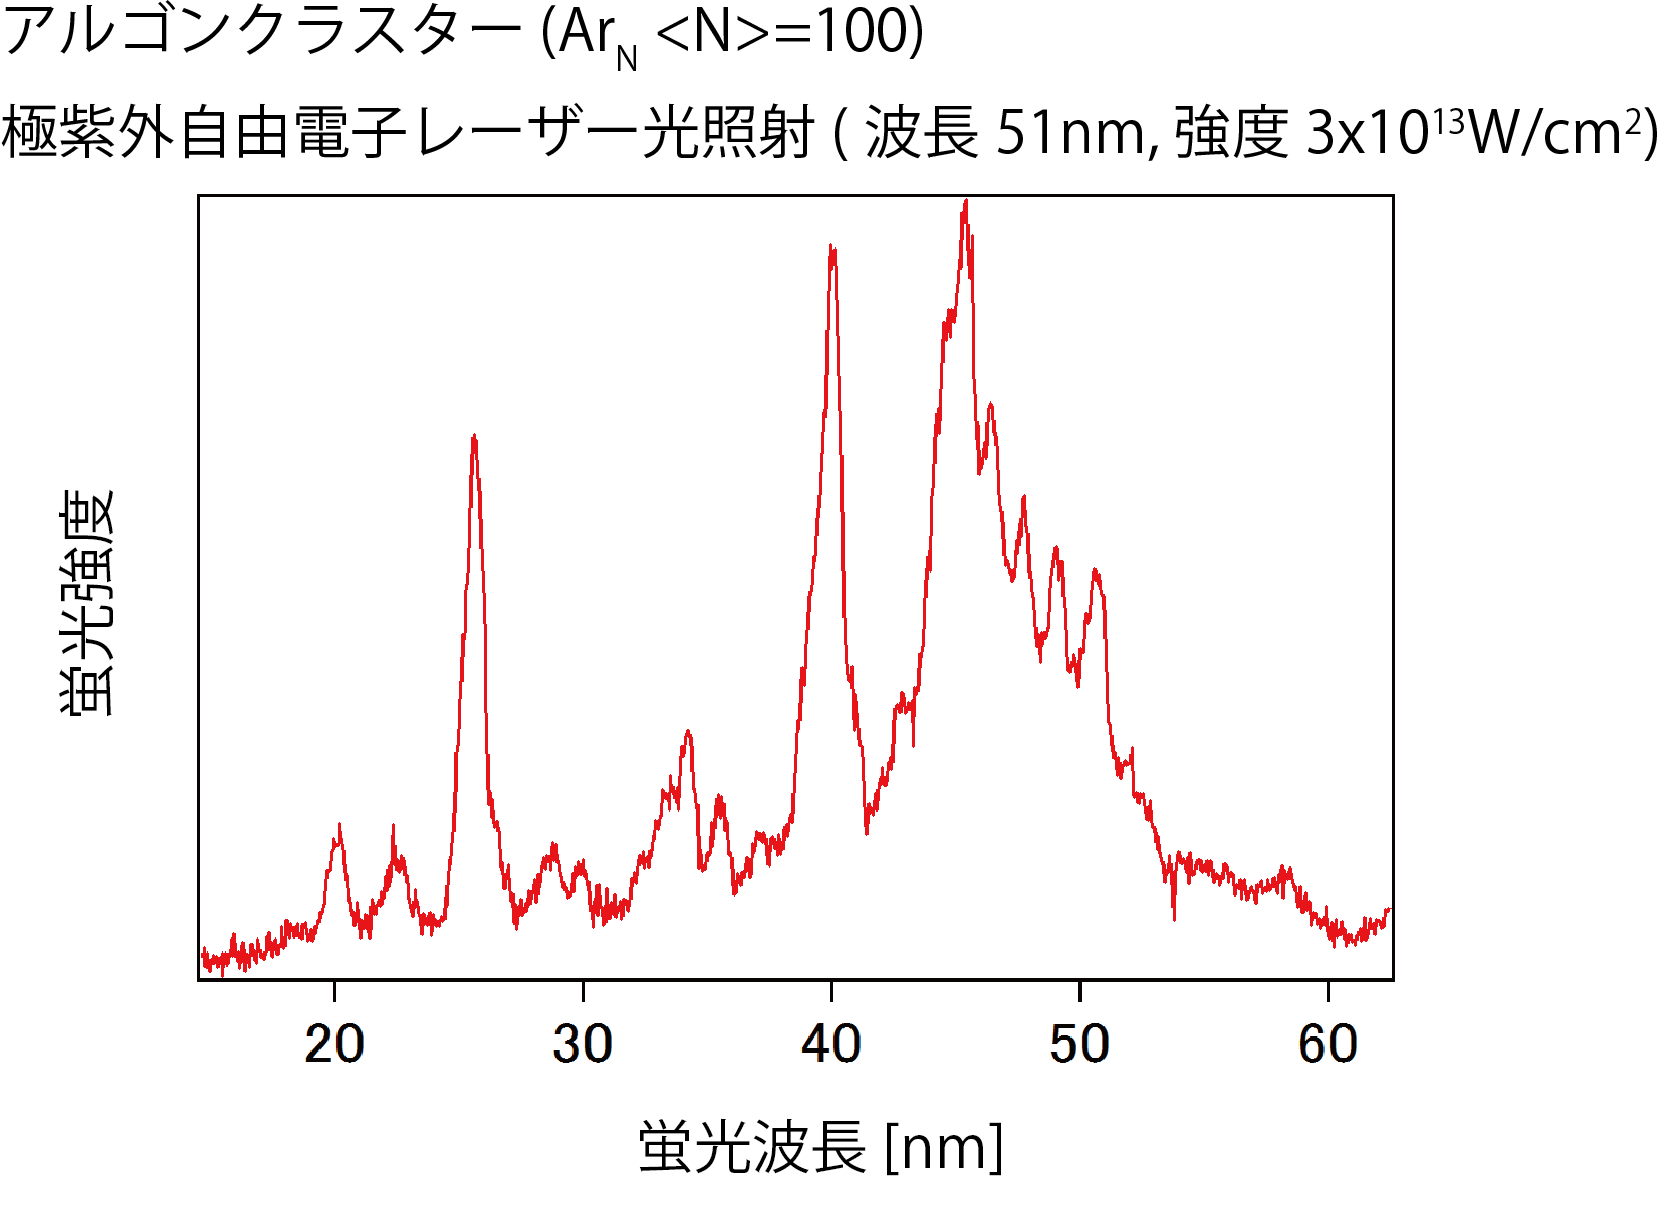 Fluorescence spectrum of Ar clusters